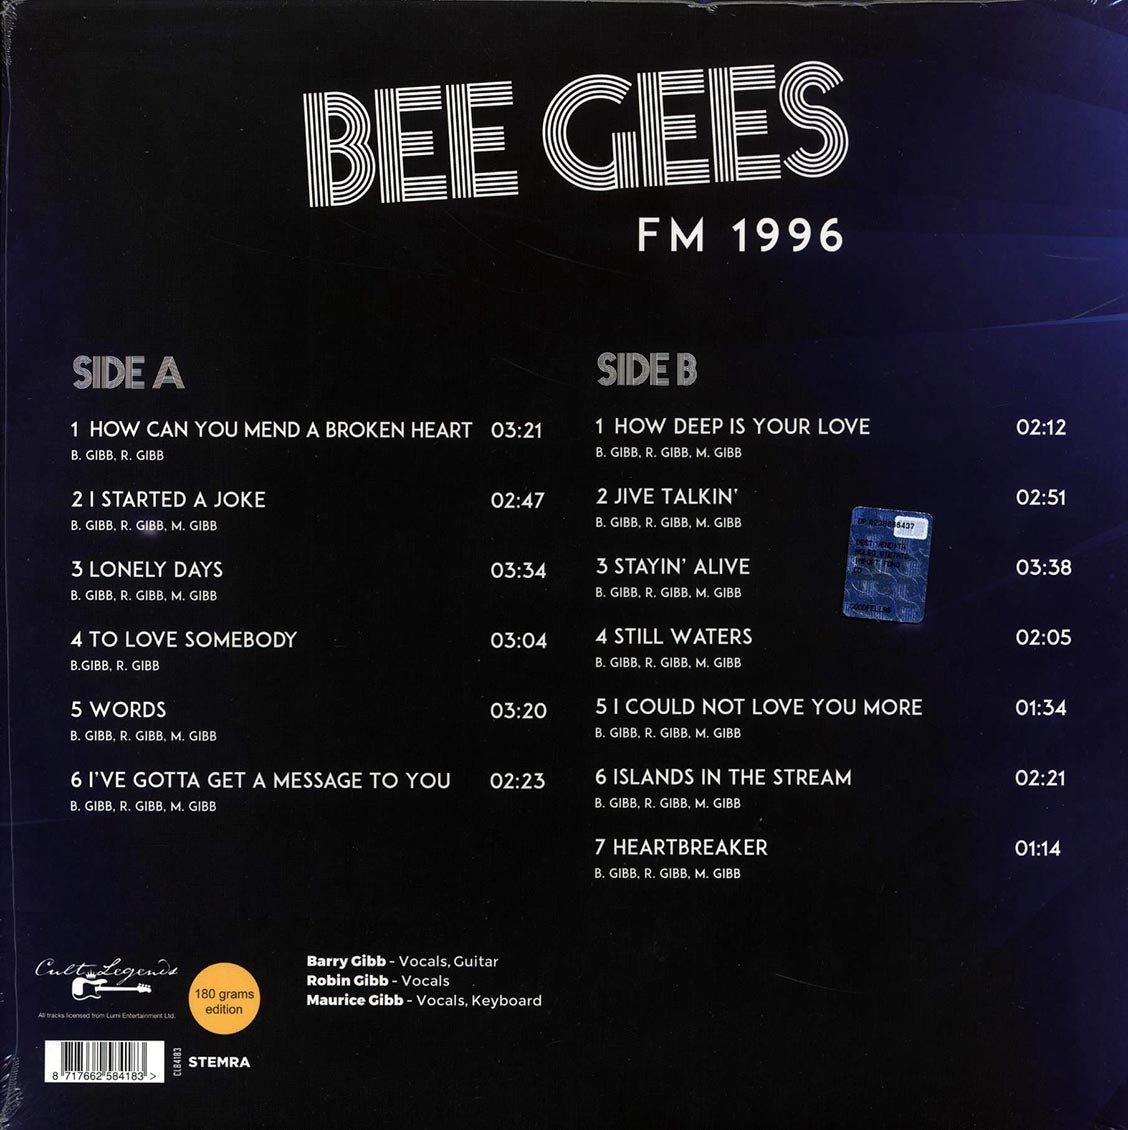 Bee Gees - FM 1996: Live At VH1 Storytellers, November 15, 1996 - Vinyl LP, LP